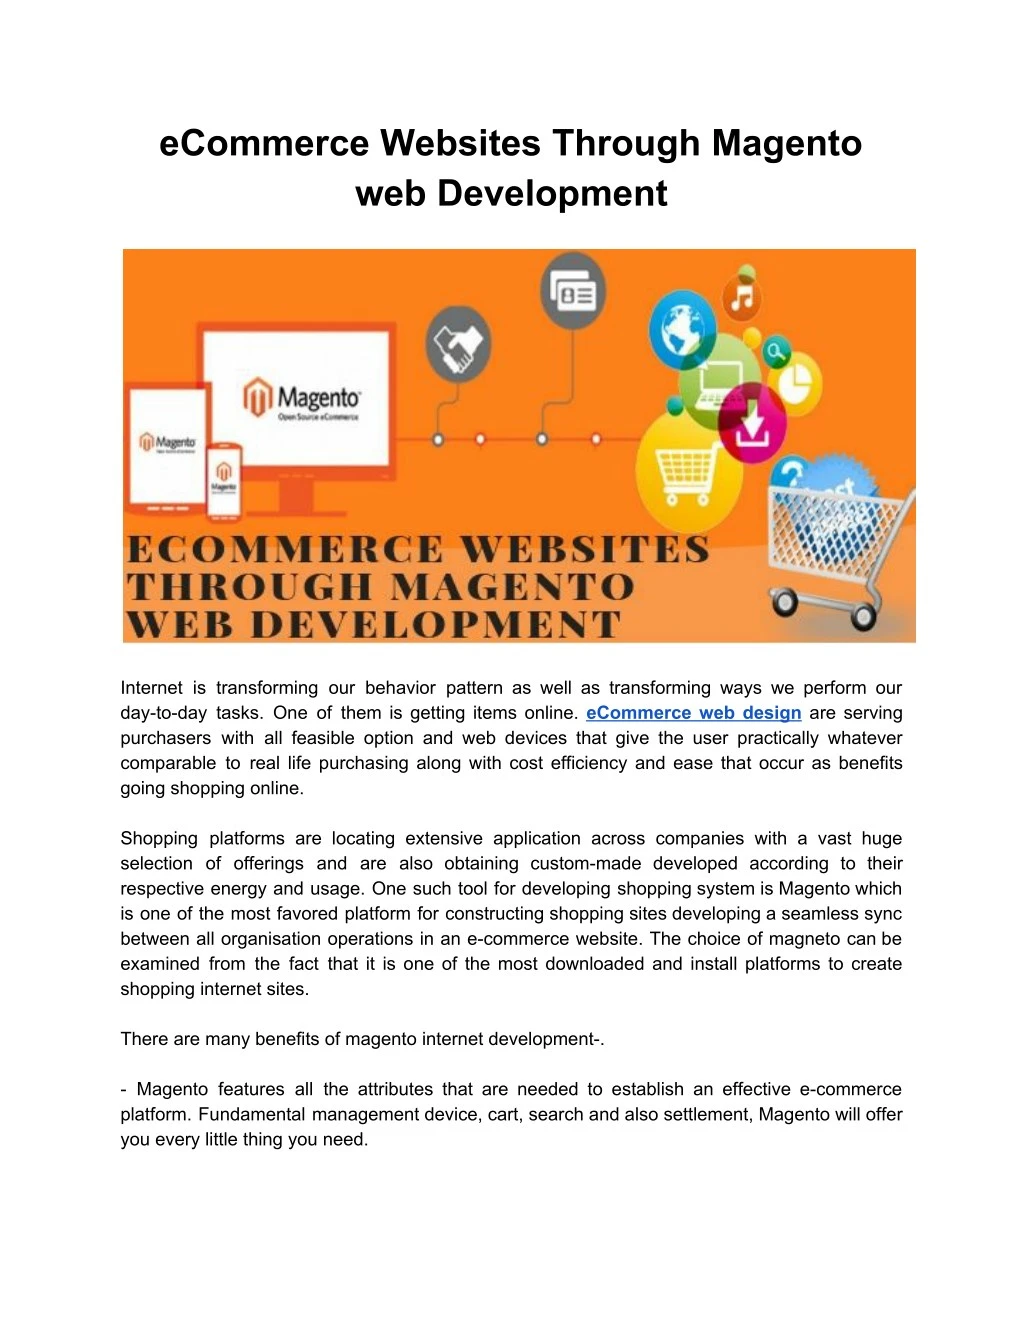 ecommerce websites through magento web development